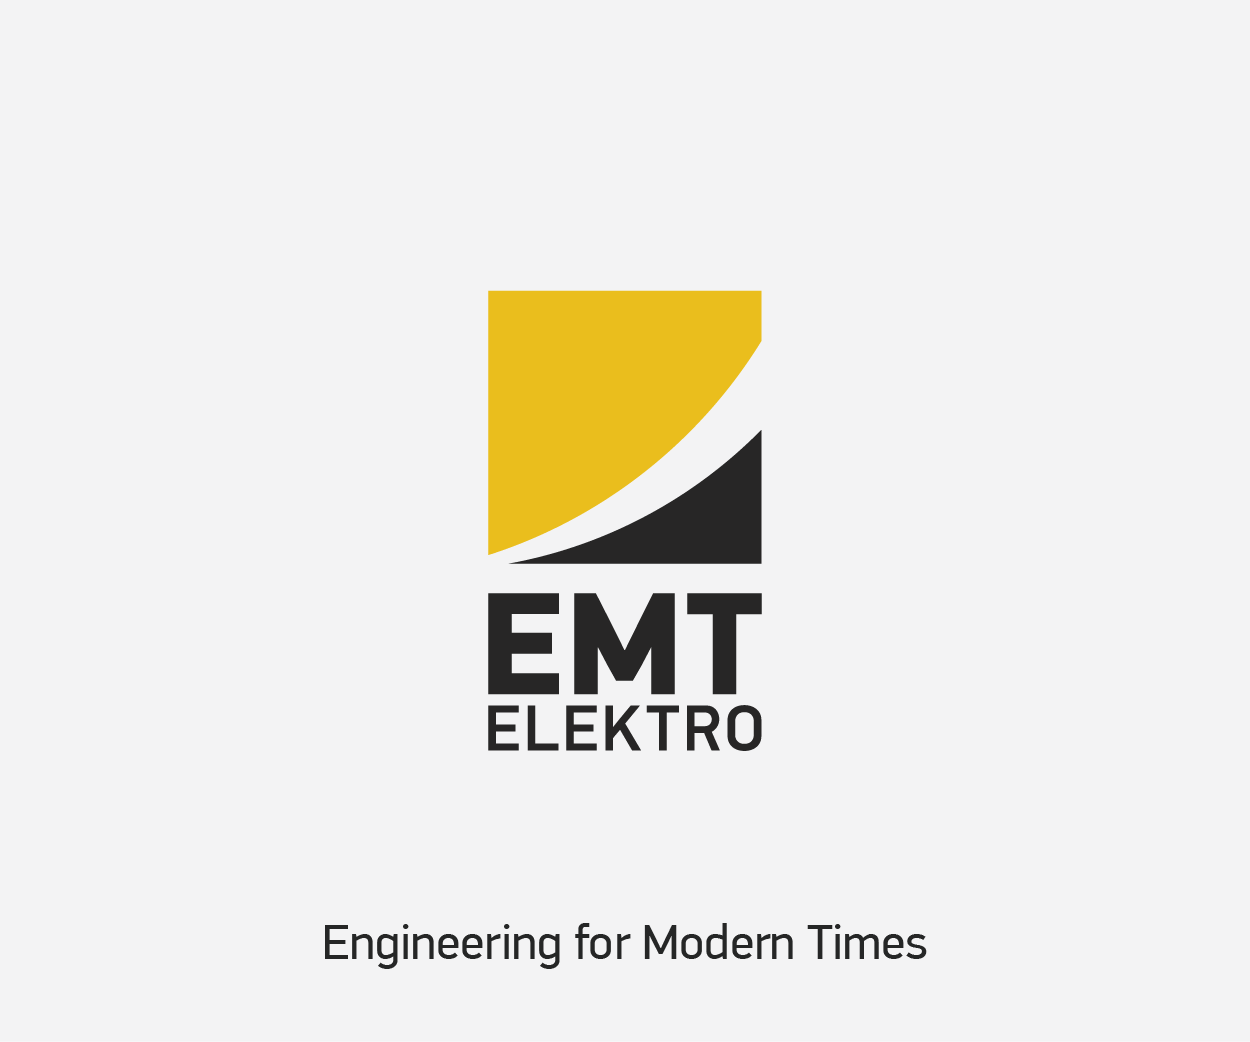 EMT elektro an engineering company Logo Design Image